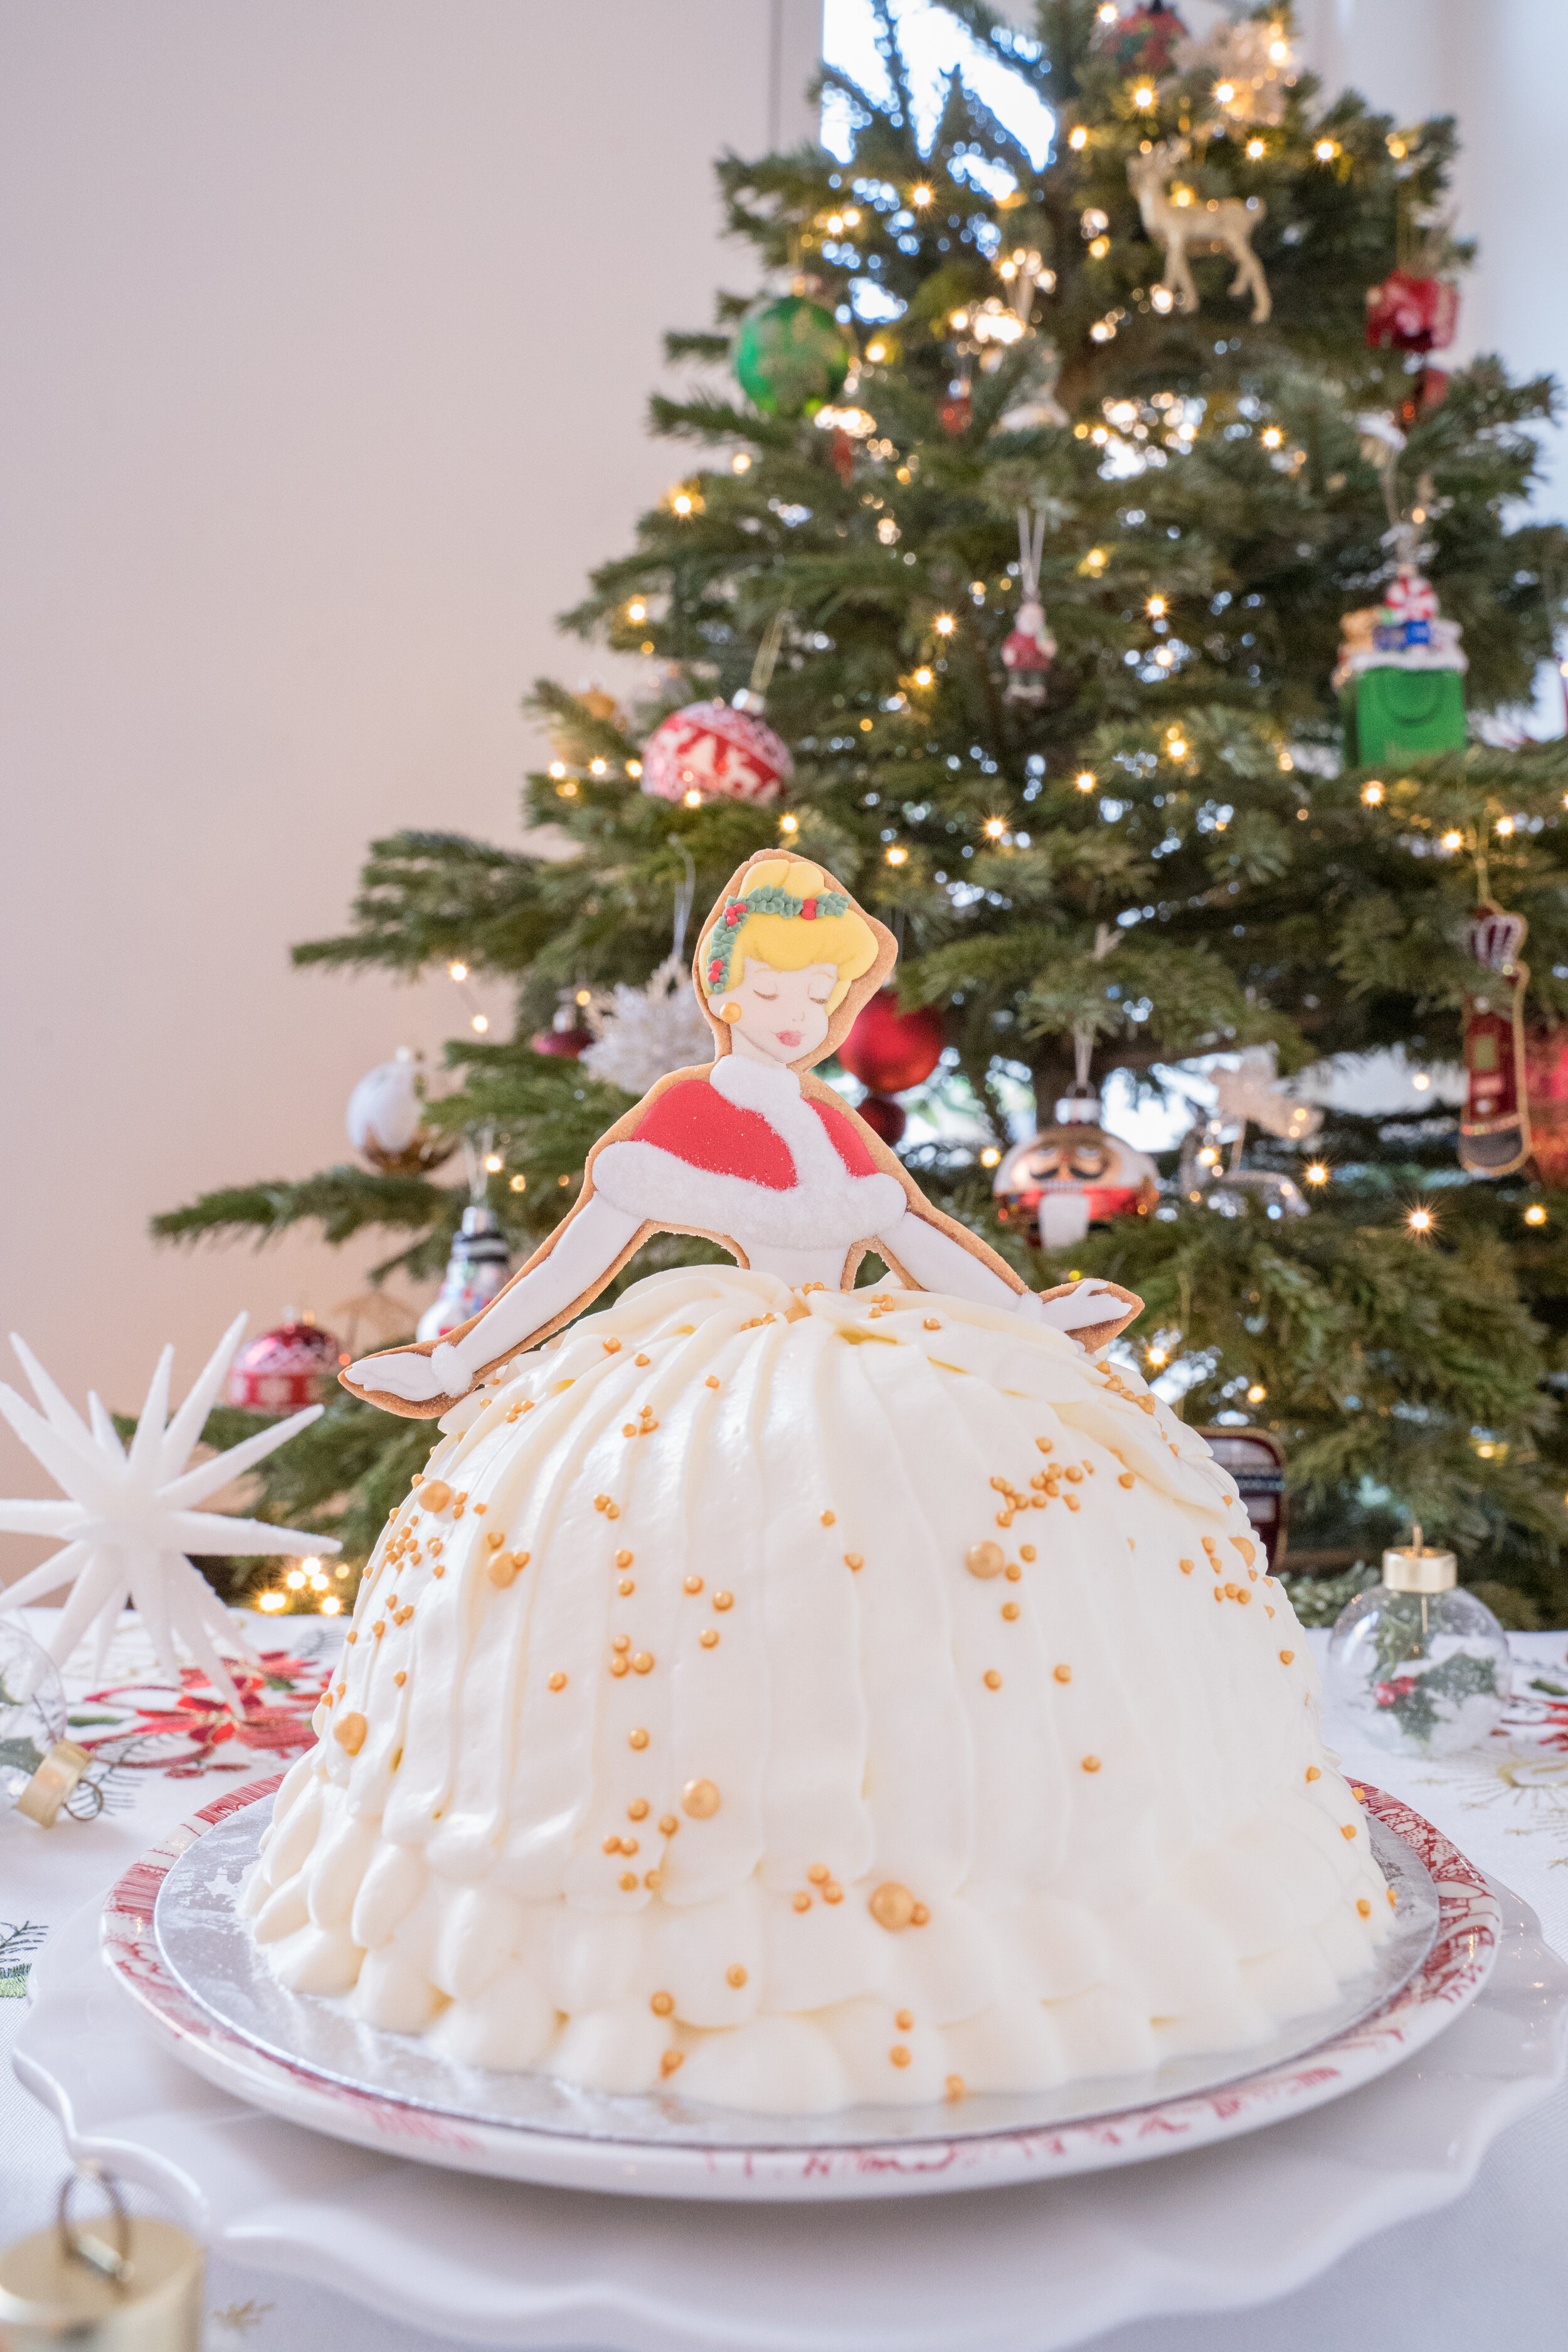 The Holly Cinderella Doll Cake - 柊飾りのシンデレラ・クリスマス 